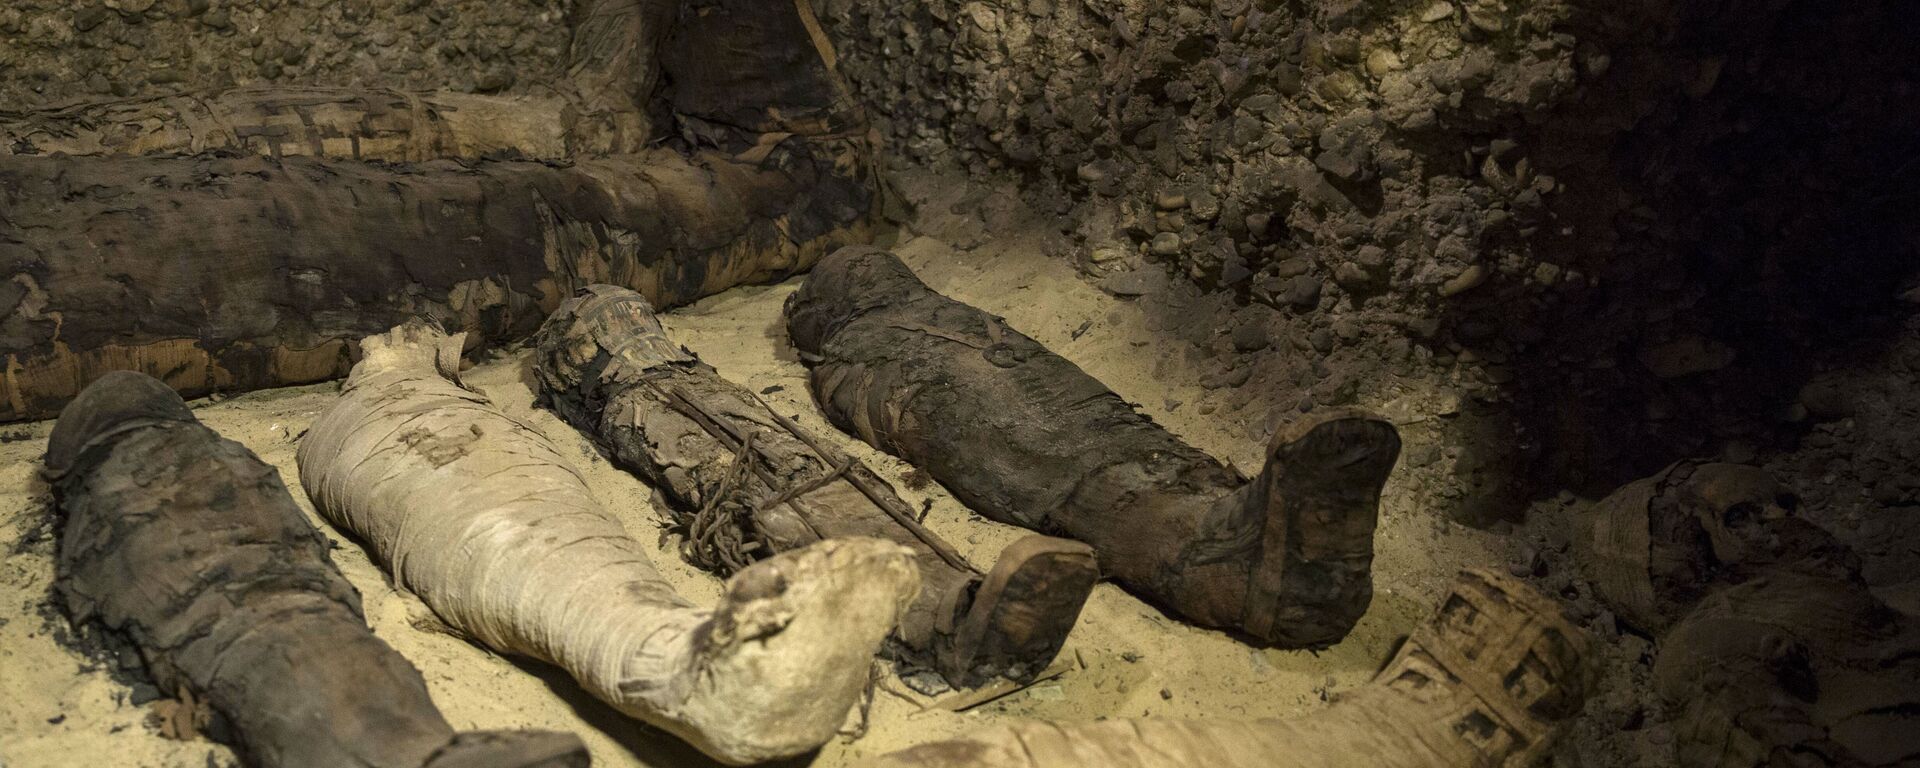 Faraonska grobnica sa 50 mumija u gradu Minja - Sputnik Srbija, 1920, 29.09.2021